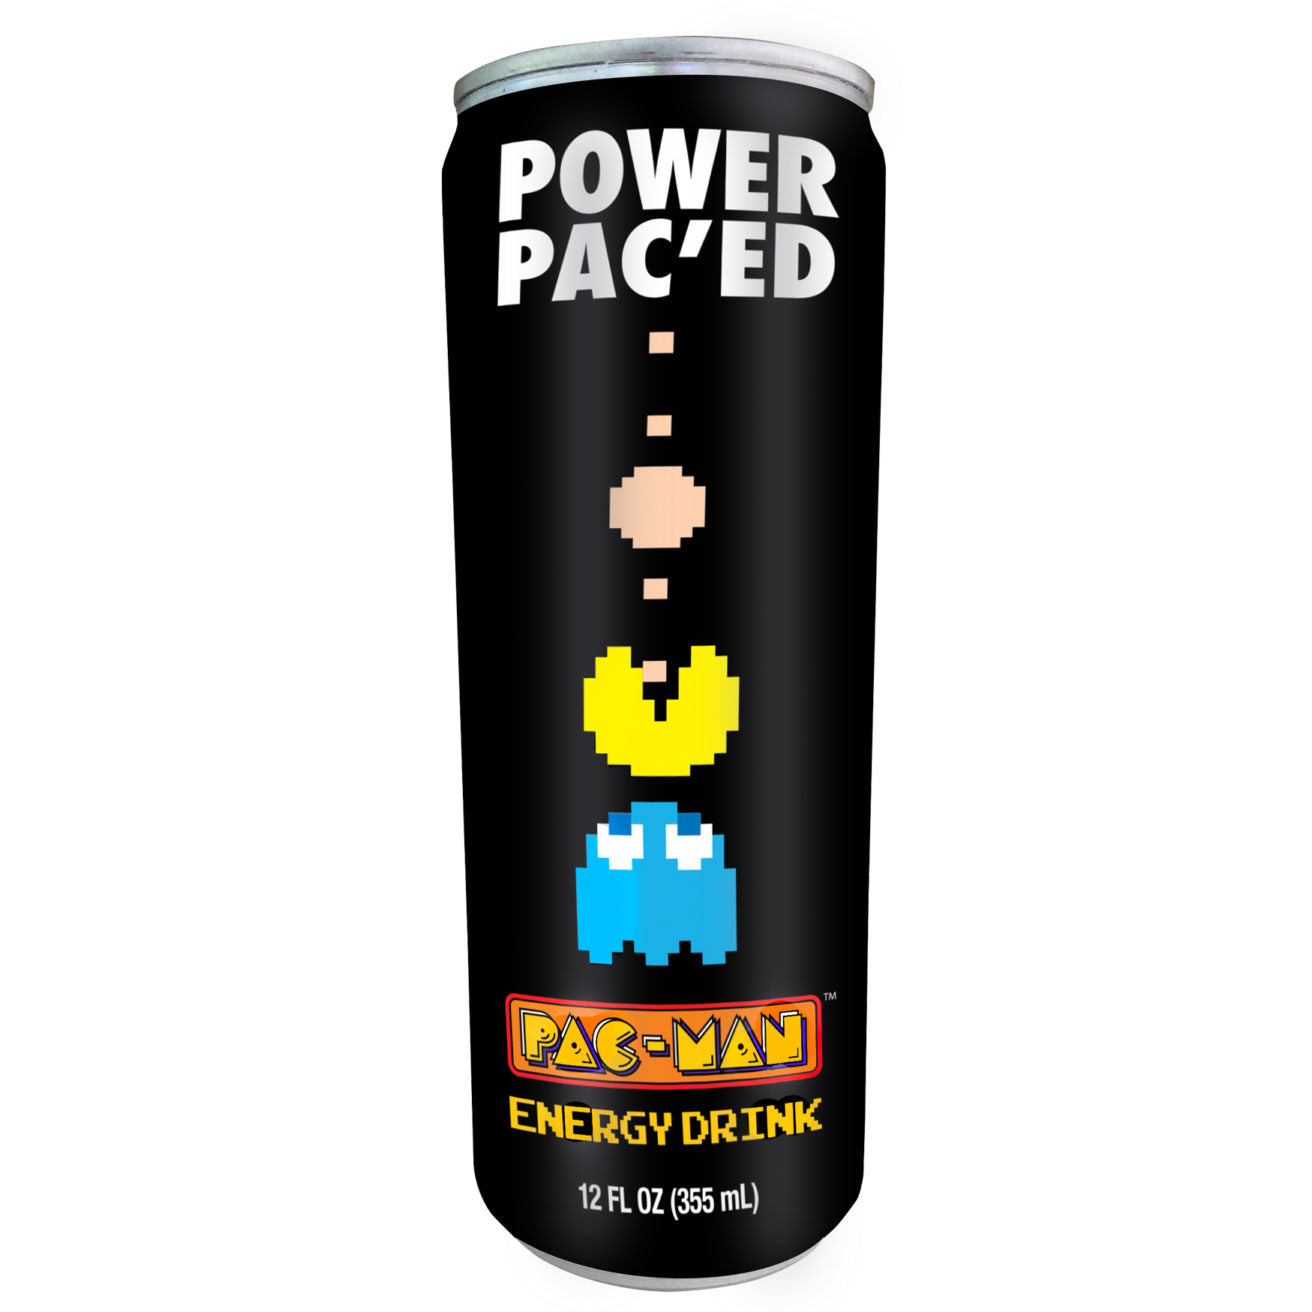 POWER PAC'ED - ENERGY DRINK